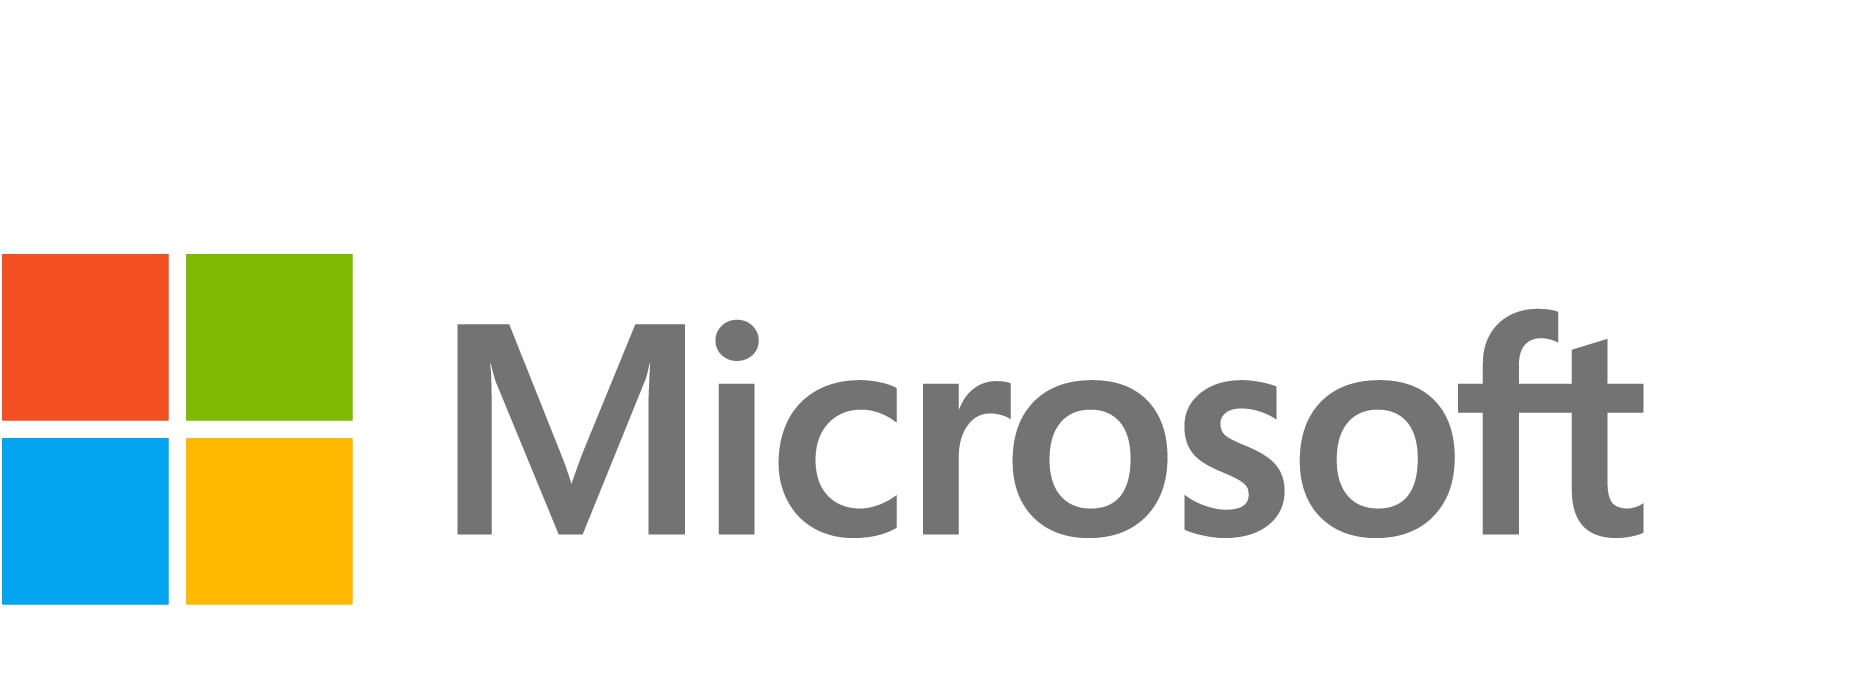 Microsoft Defender for Endpoint Server - subscription license (1 month) - 1 license